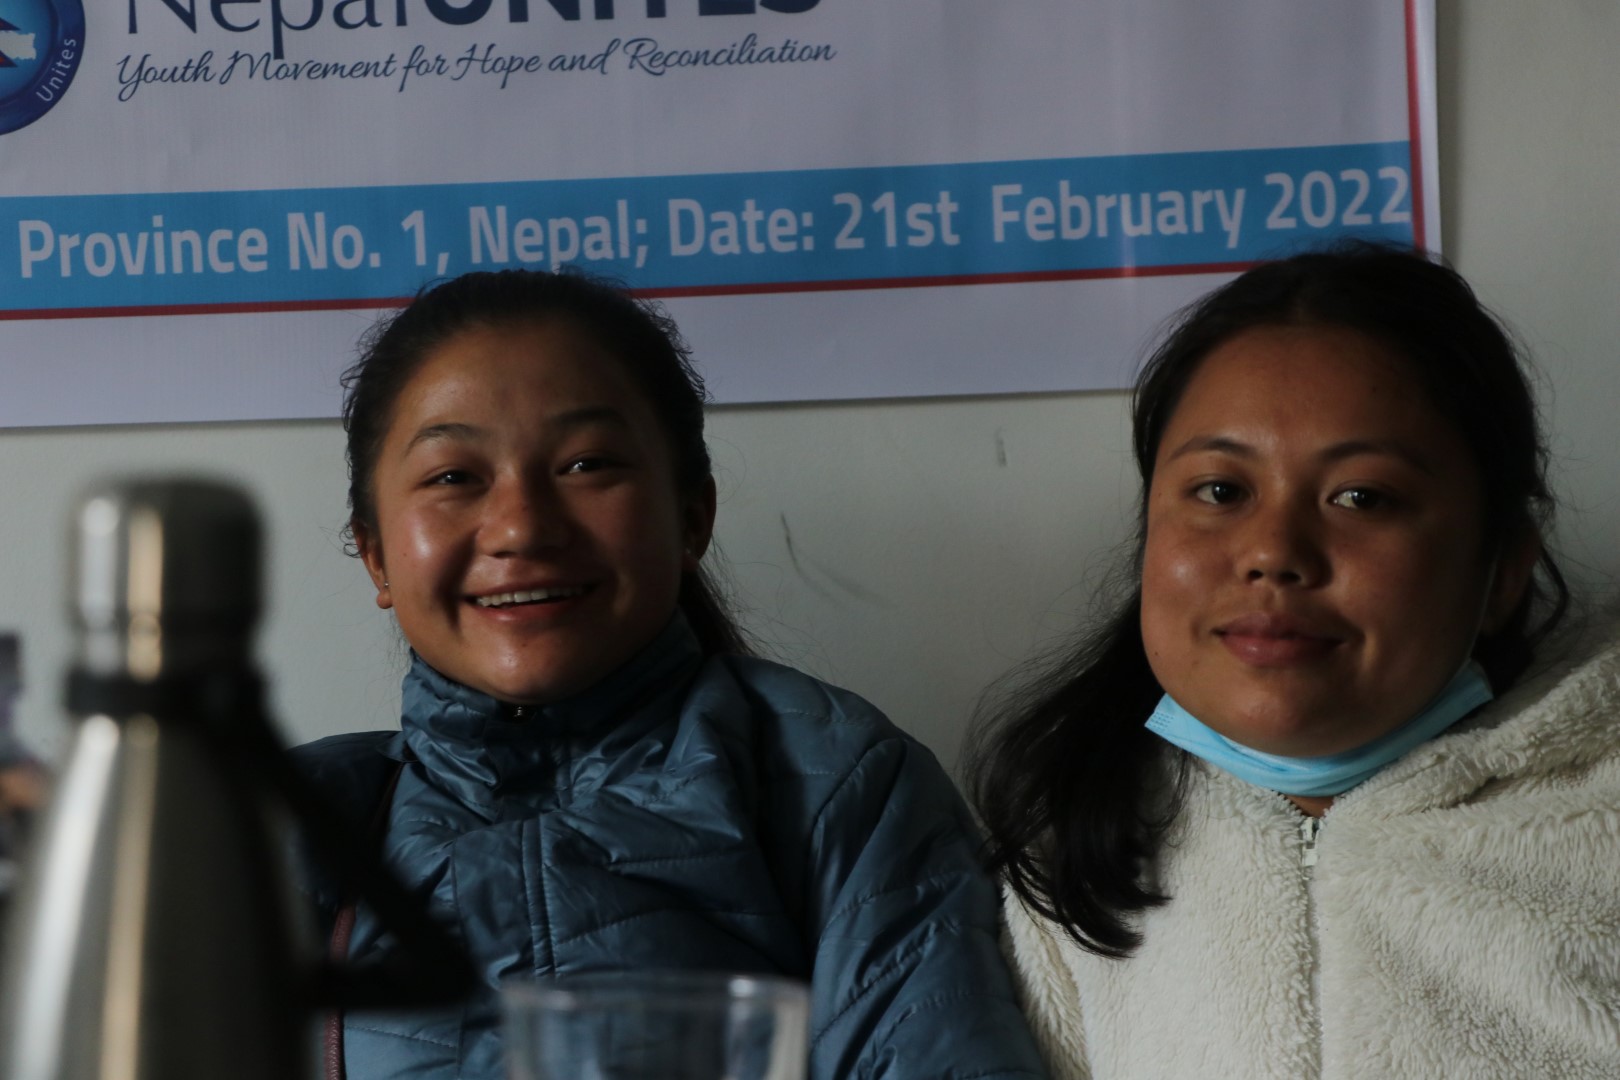 Nepal Unites Alumnus Follow-Up Workshop